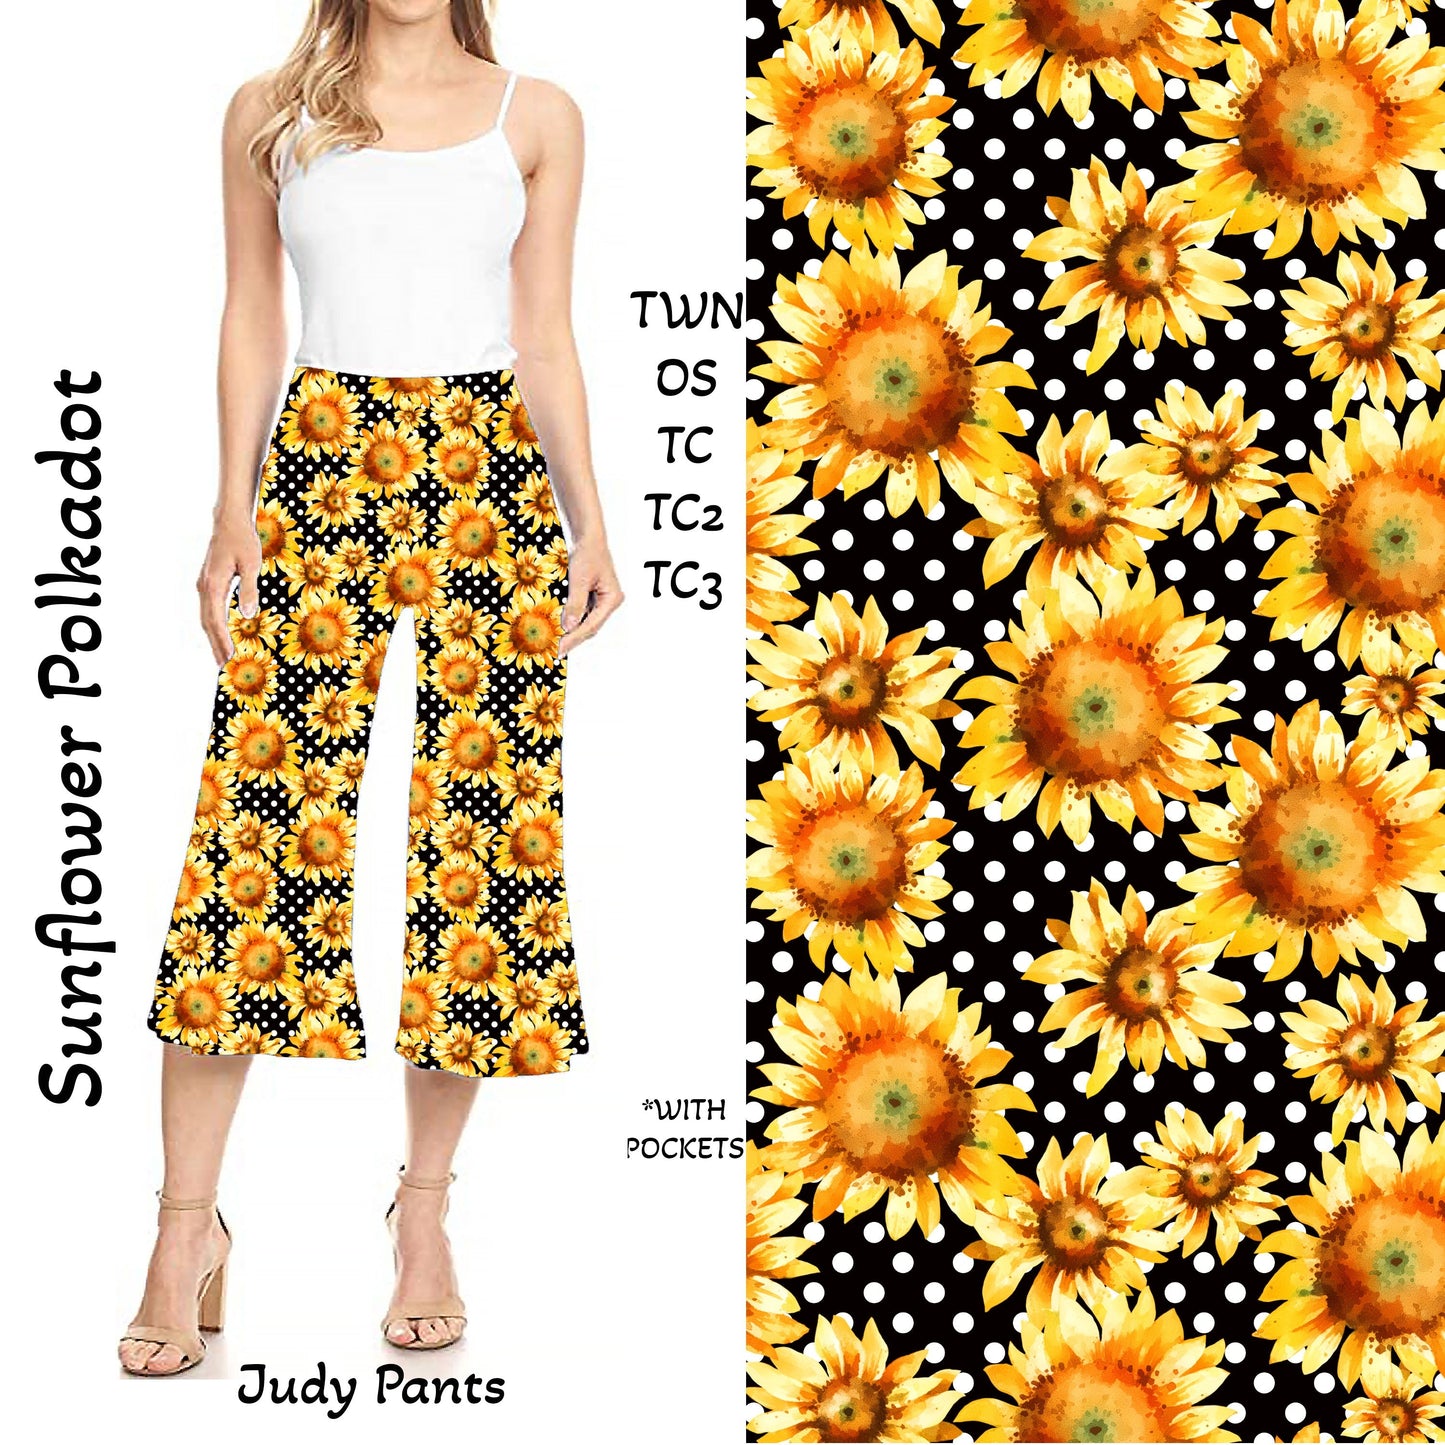 Sunflower Polkadot Judy Pants with Pockets